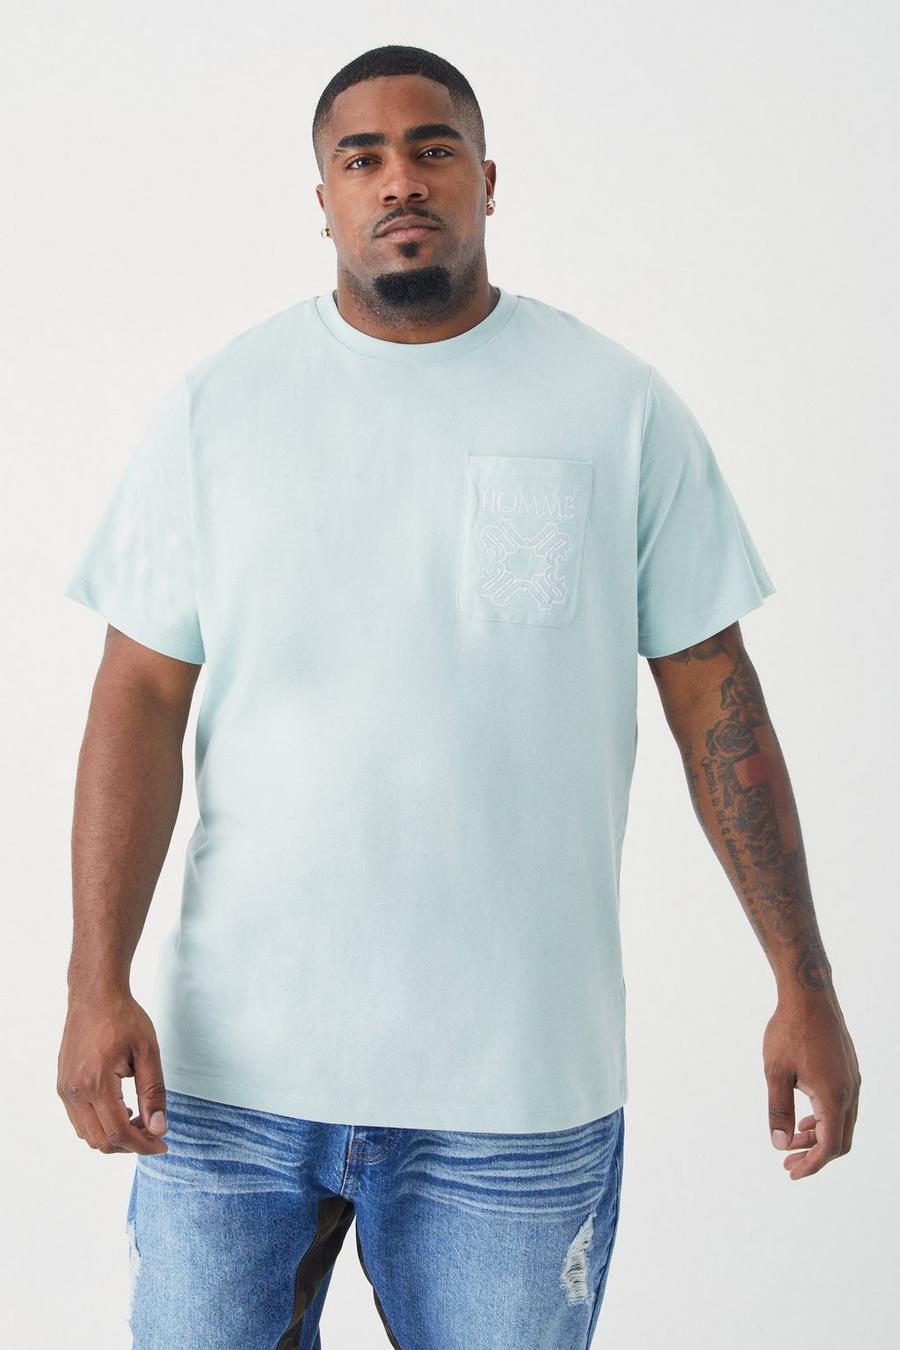 T-shirt Plus Size Slim Fit Homme con ricami e tasche, Sage gerde